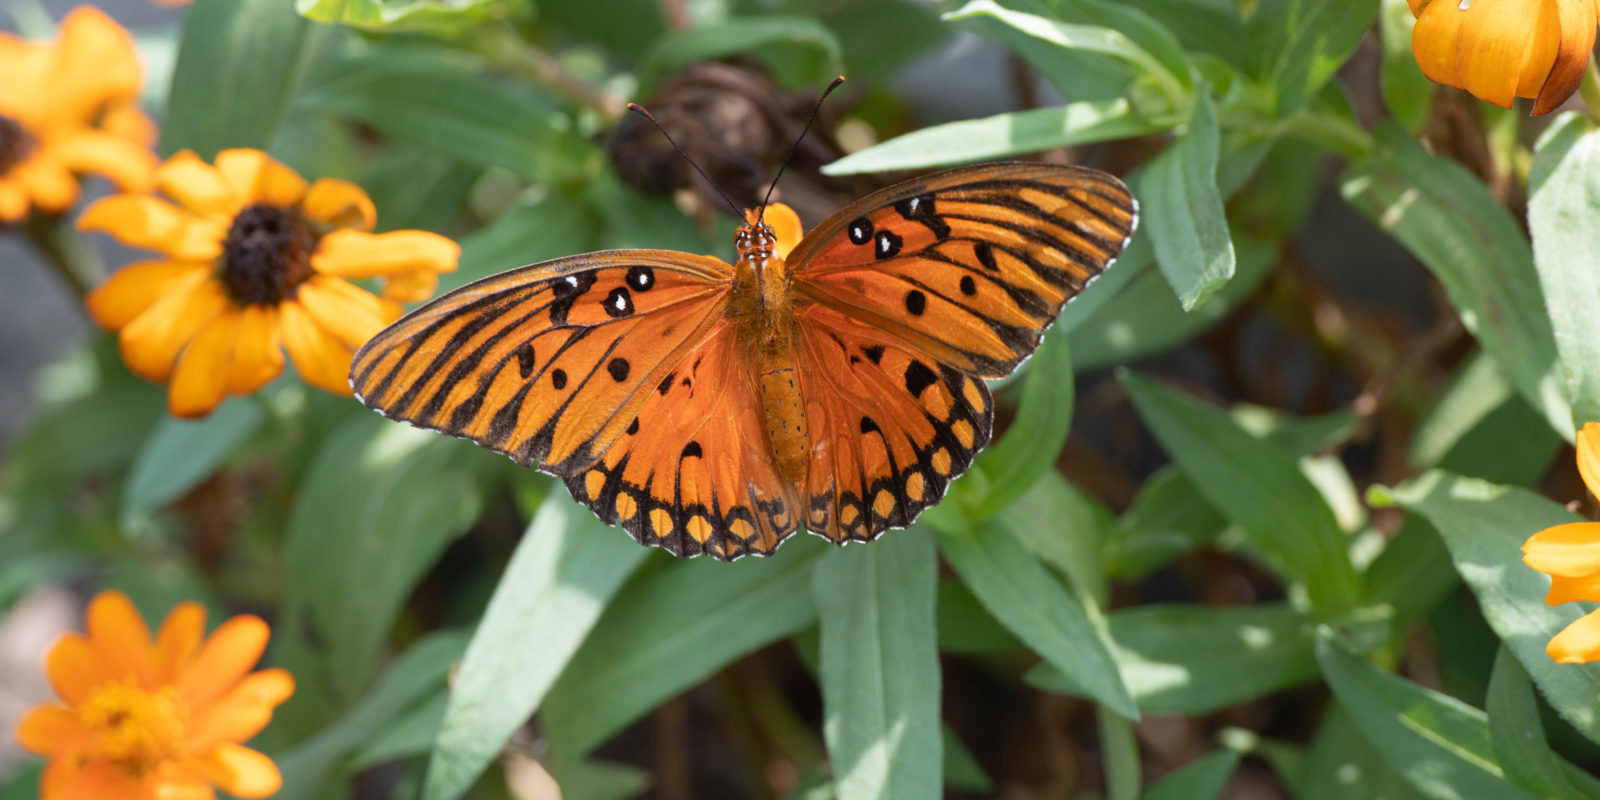 jim-west-collierville-tn-wildlife-nature-butterfly-98